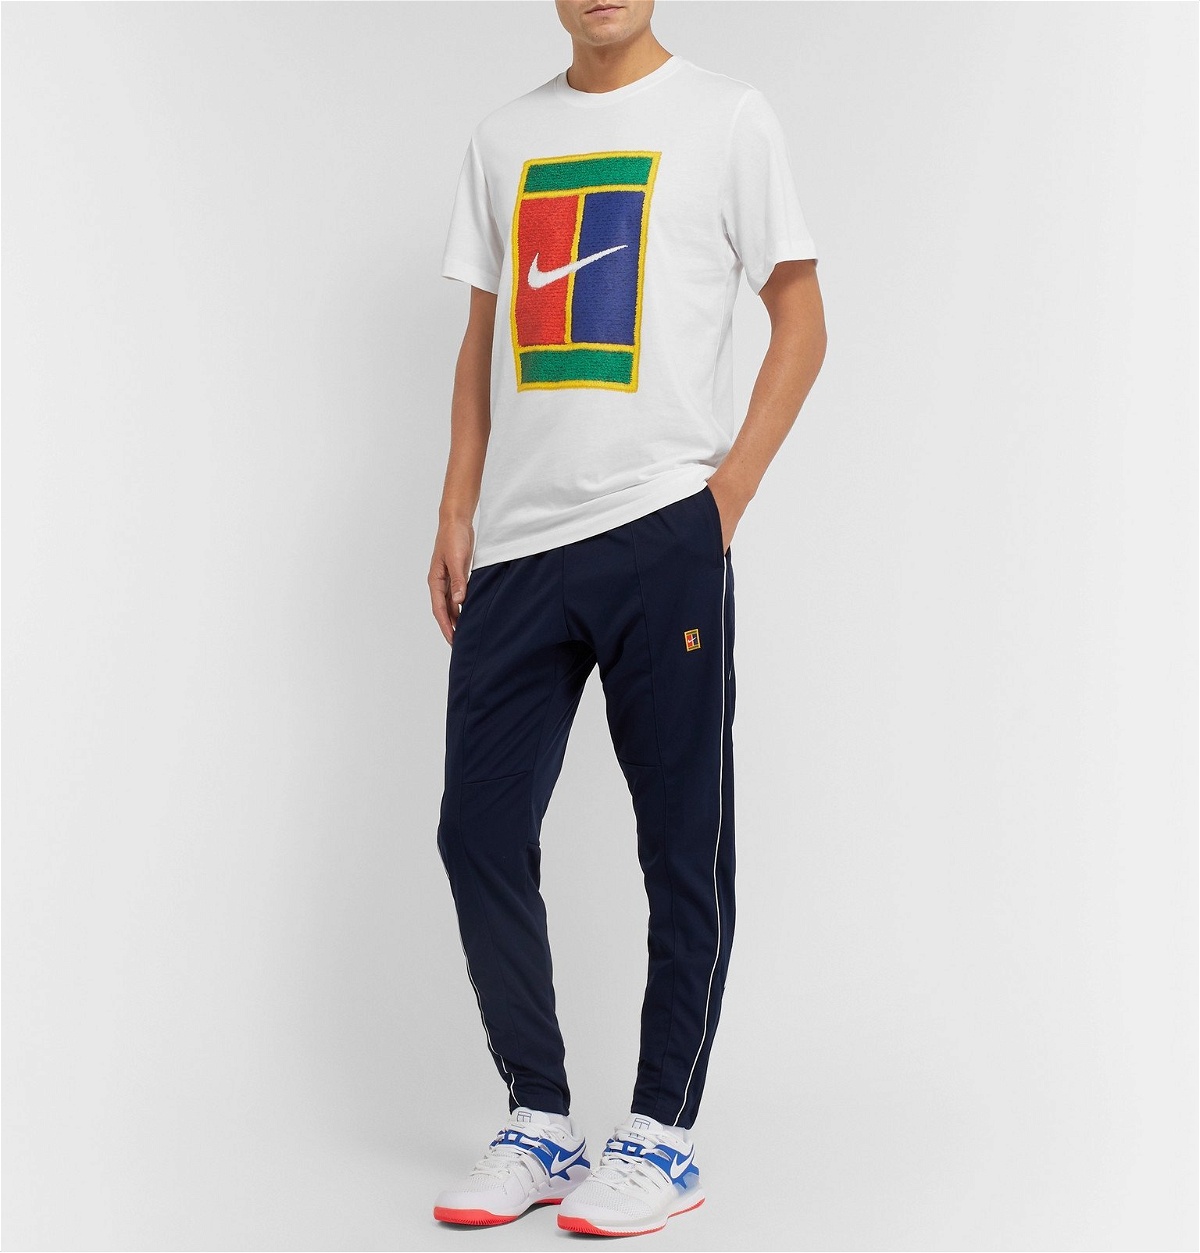 Zus gebied vice versa Nike Tennis - NikeCourt Logo-Print Cotton-Jersey T-Shirt - White Nike Tennis